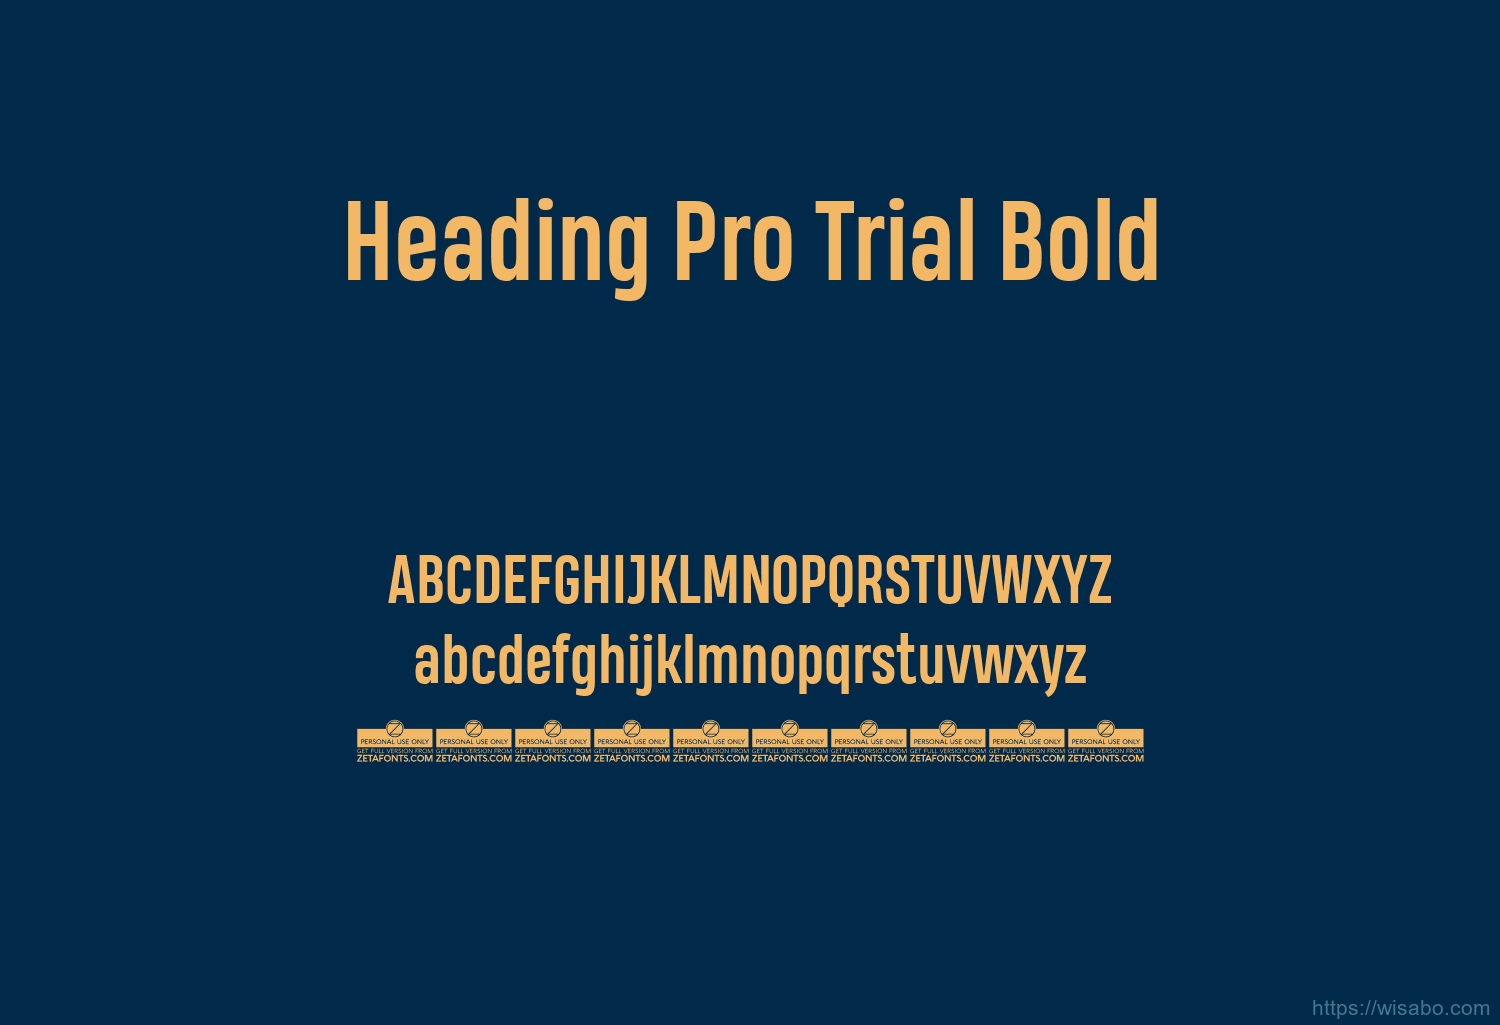 Heading Pro Trial Bold